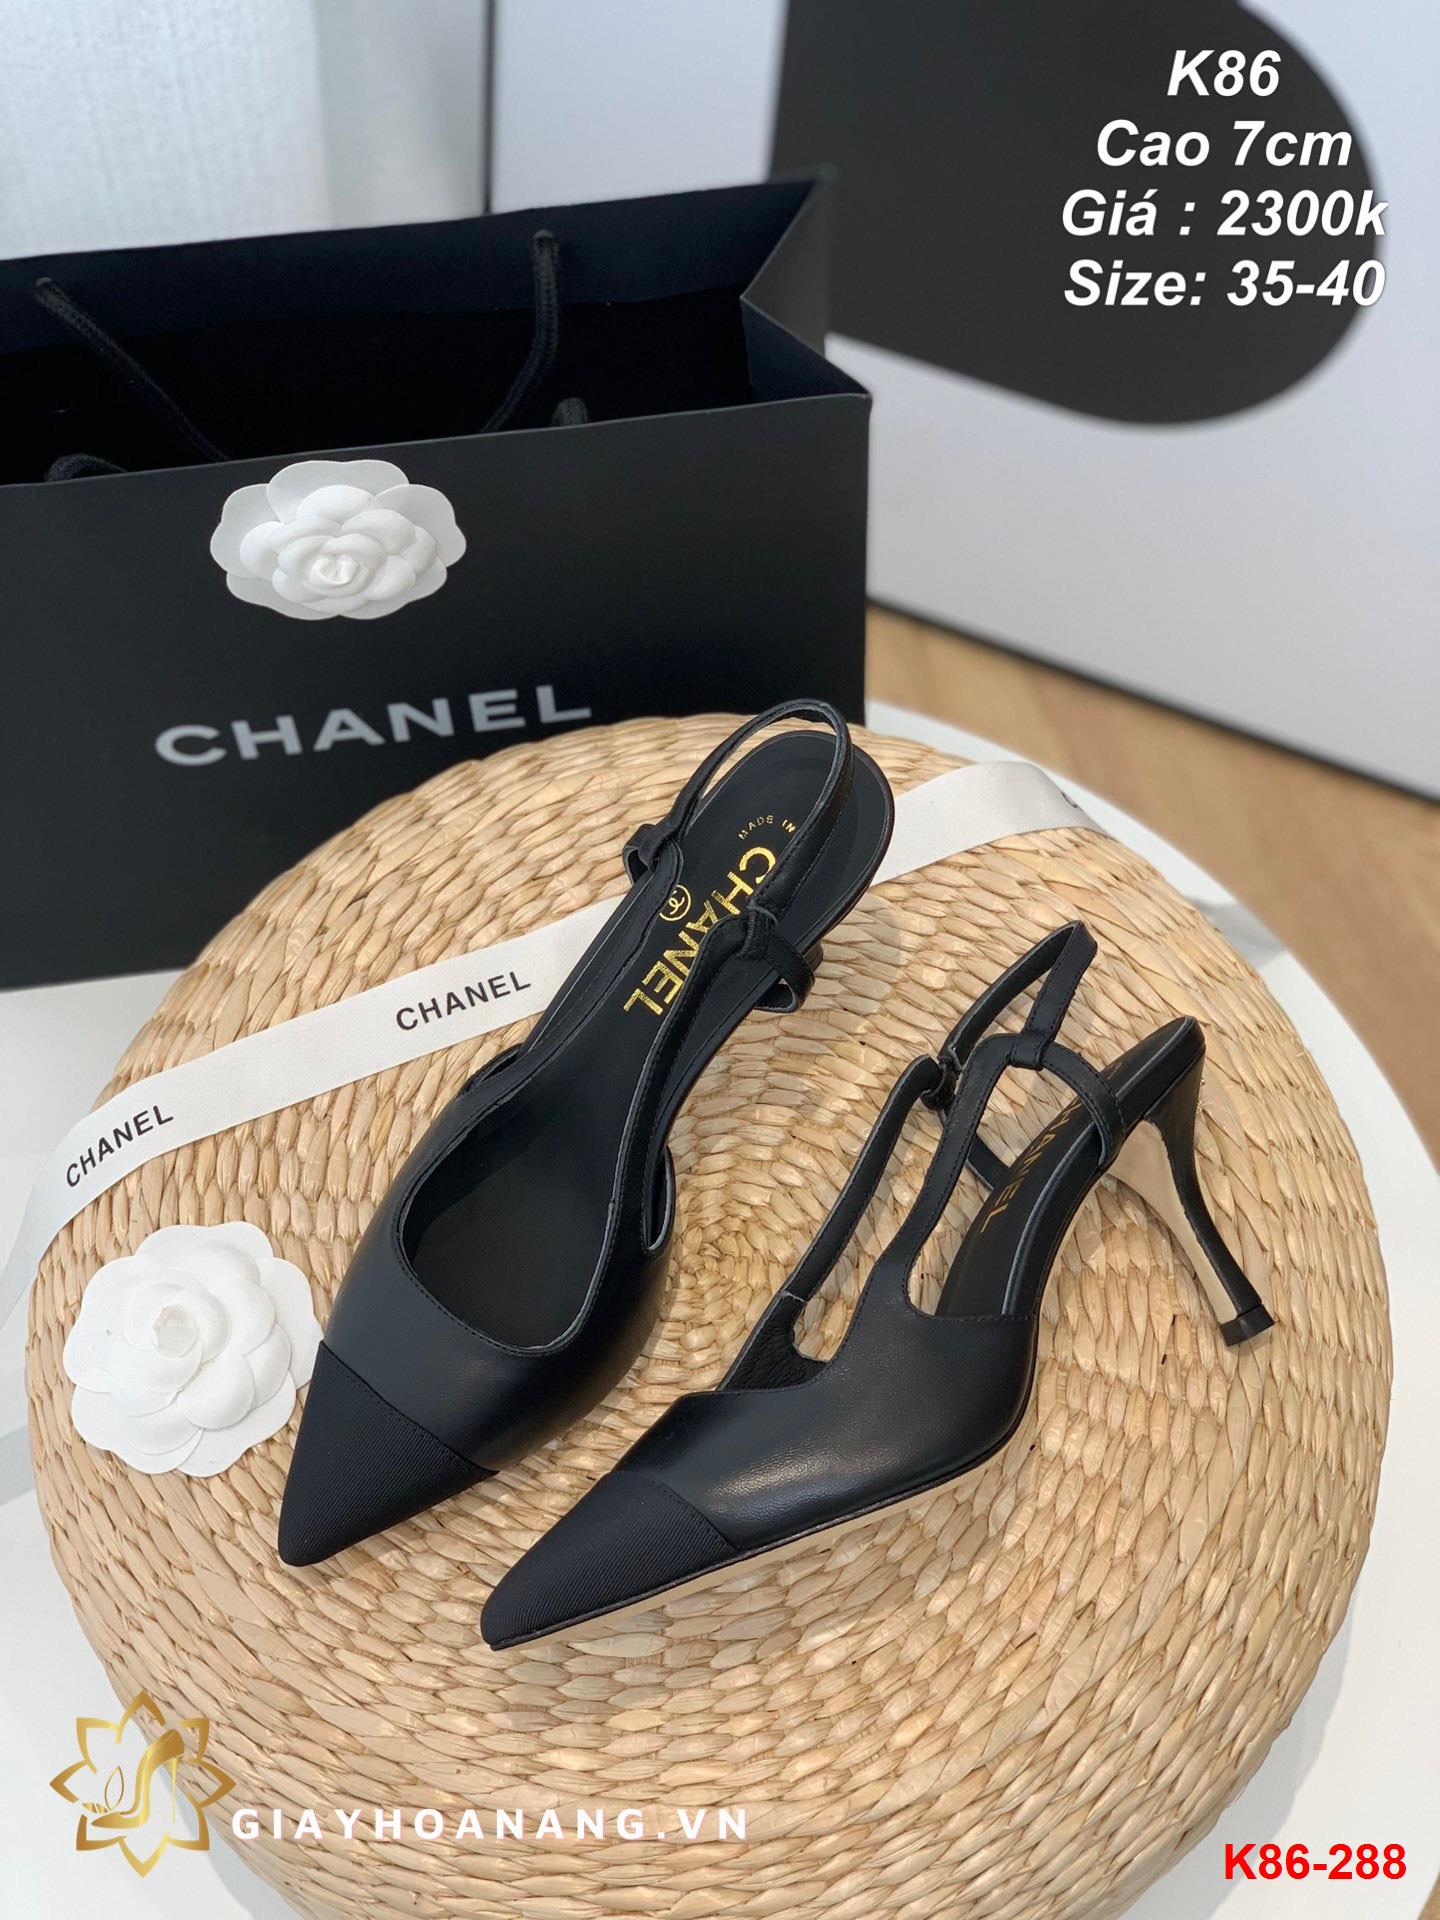 K86-288 Chanel sandal cao 7cm siêu cấp